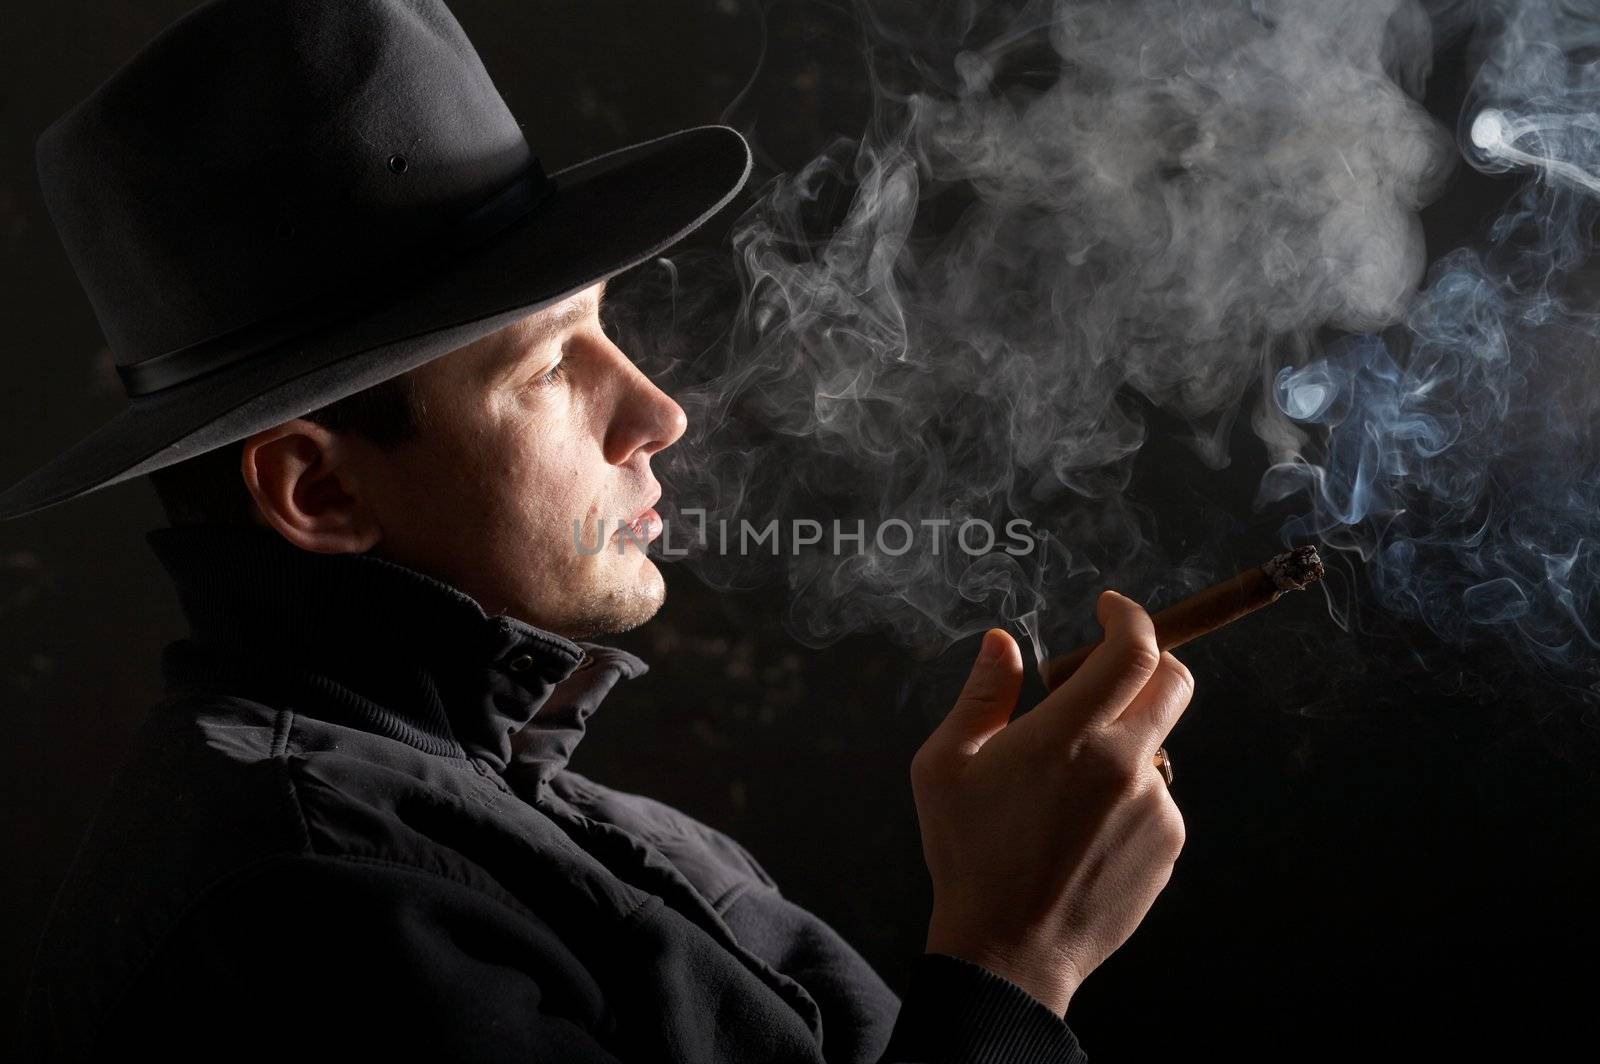 An image of man in felt hat in dark room